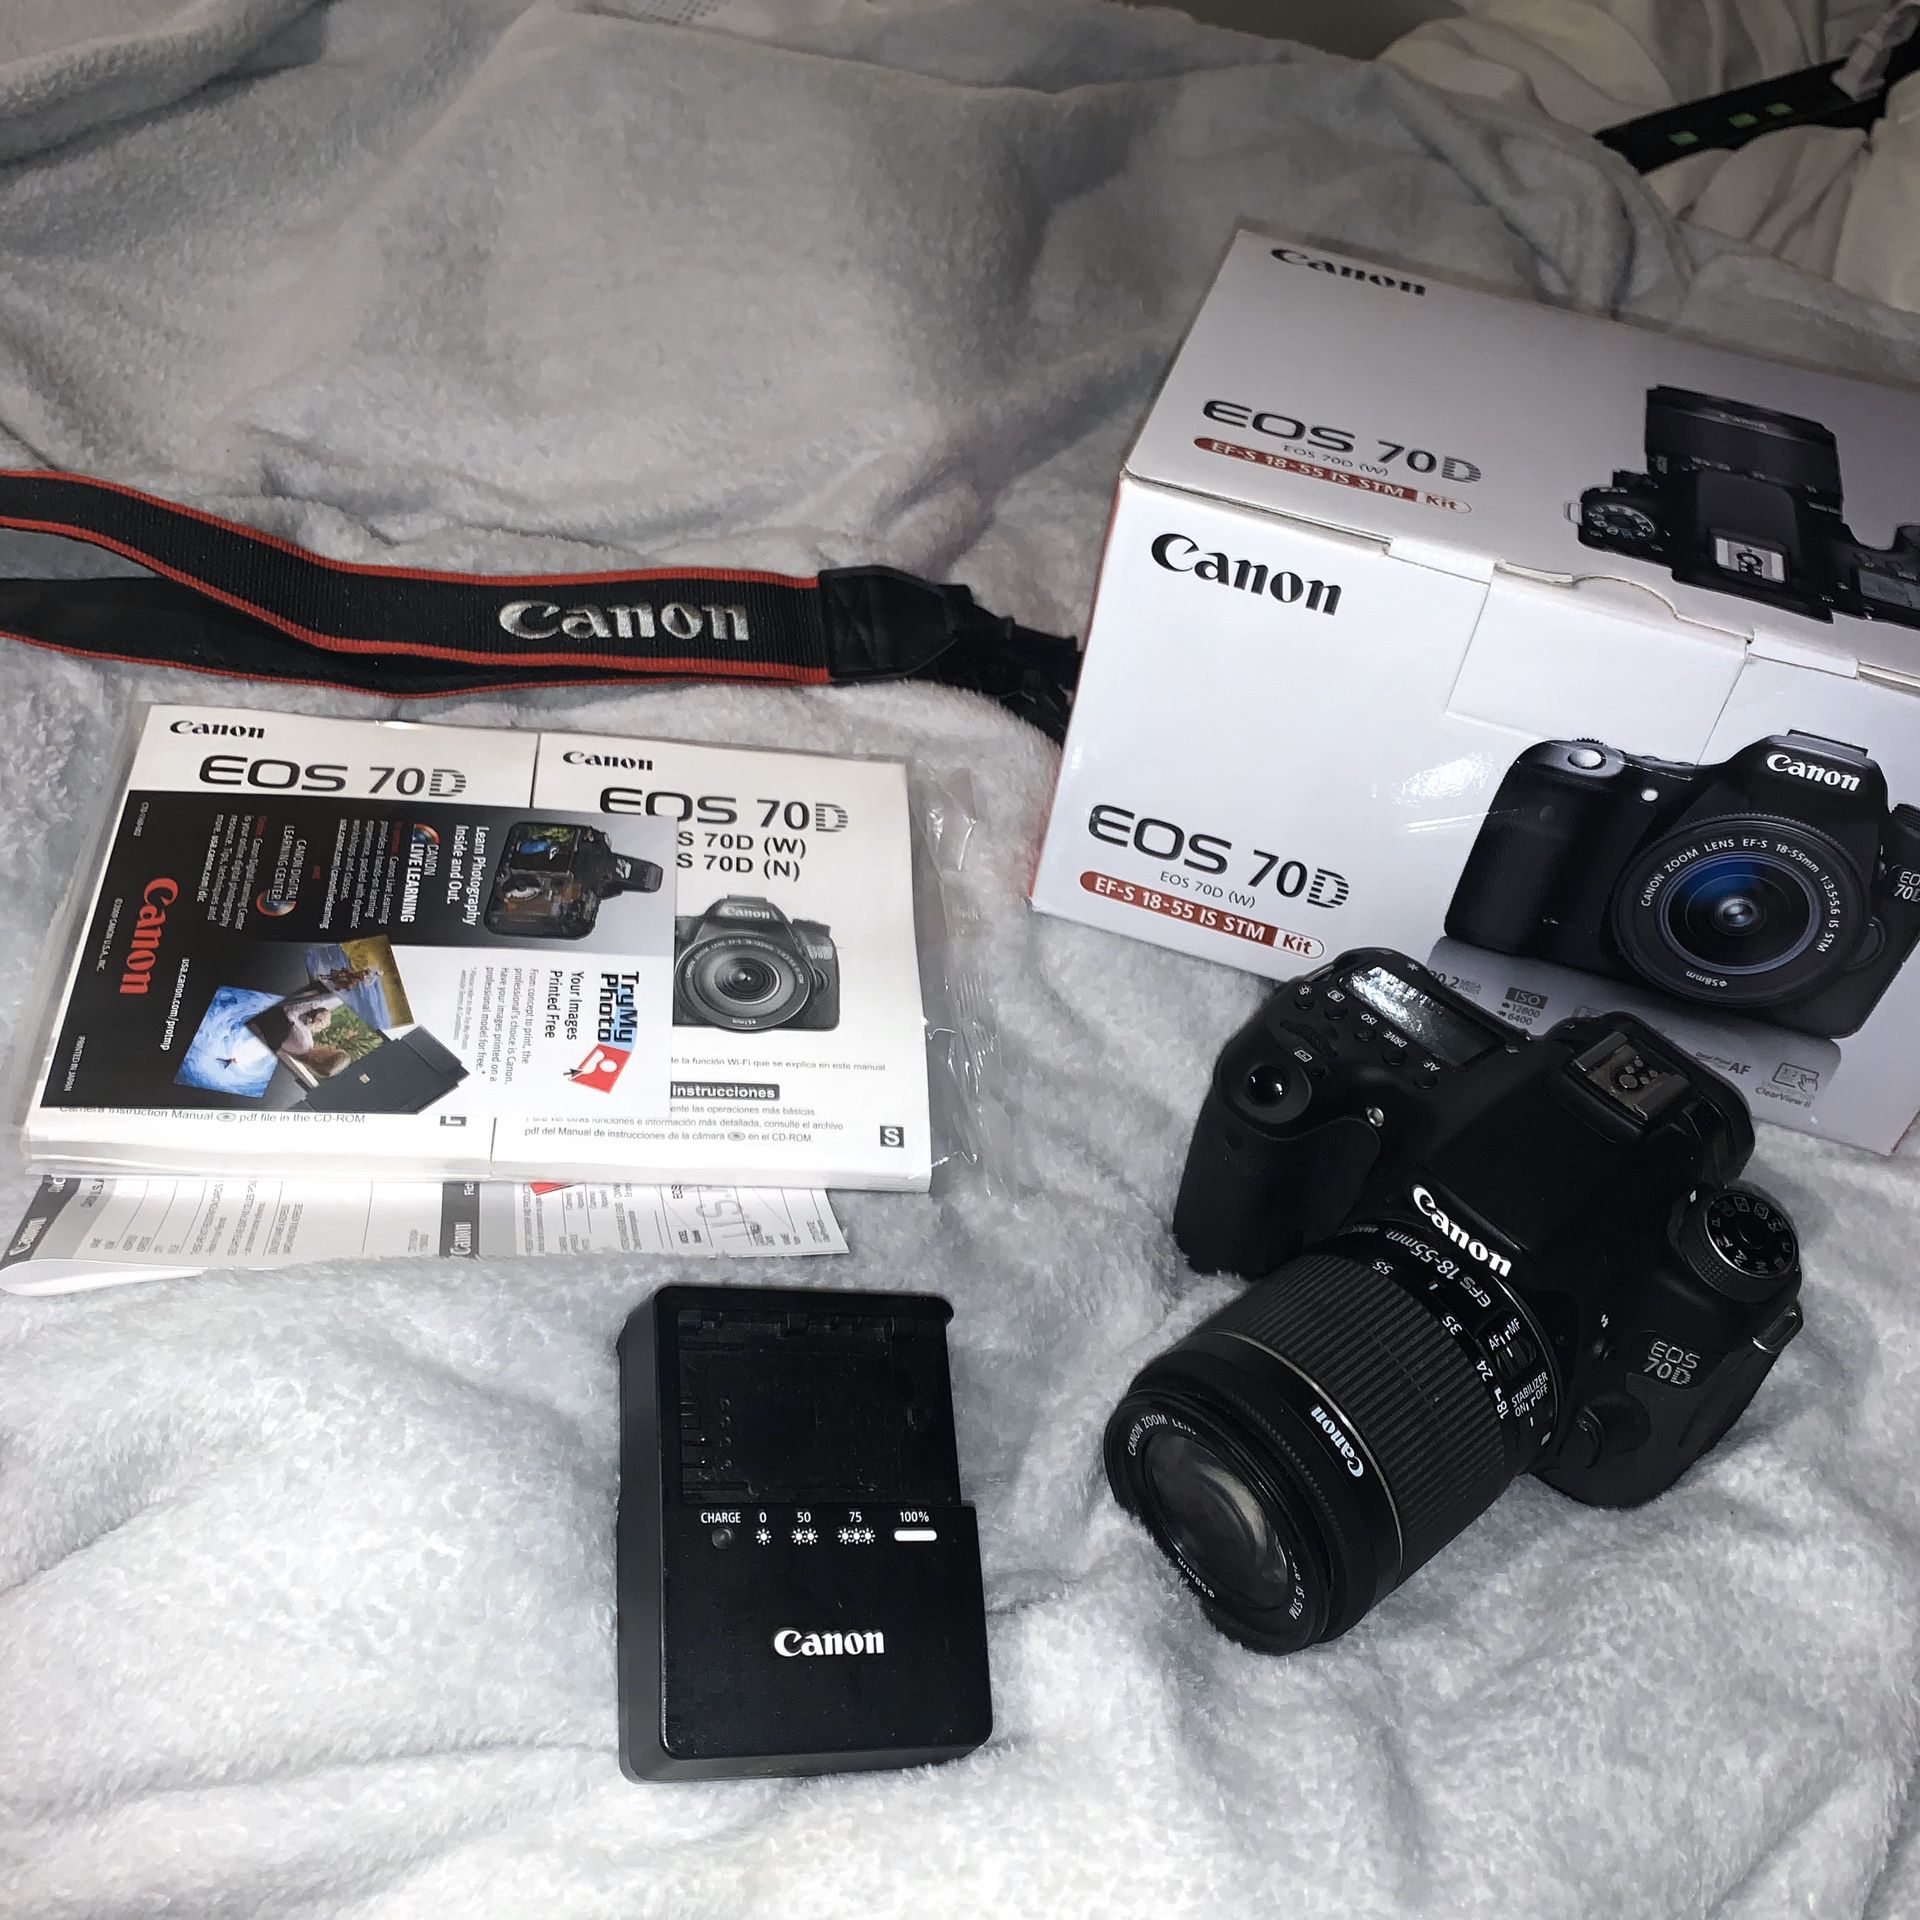 Canon EOS 70D Digital SLR Camera with 18-55mm STM Lens